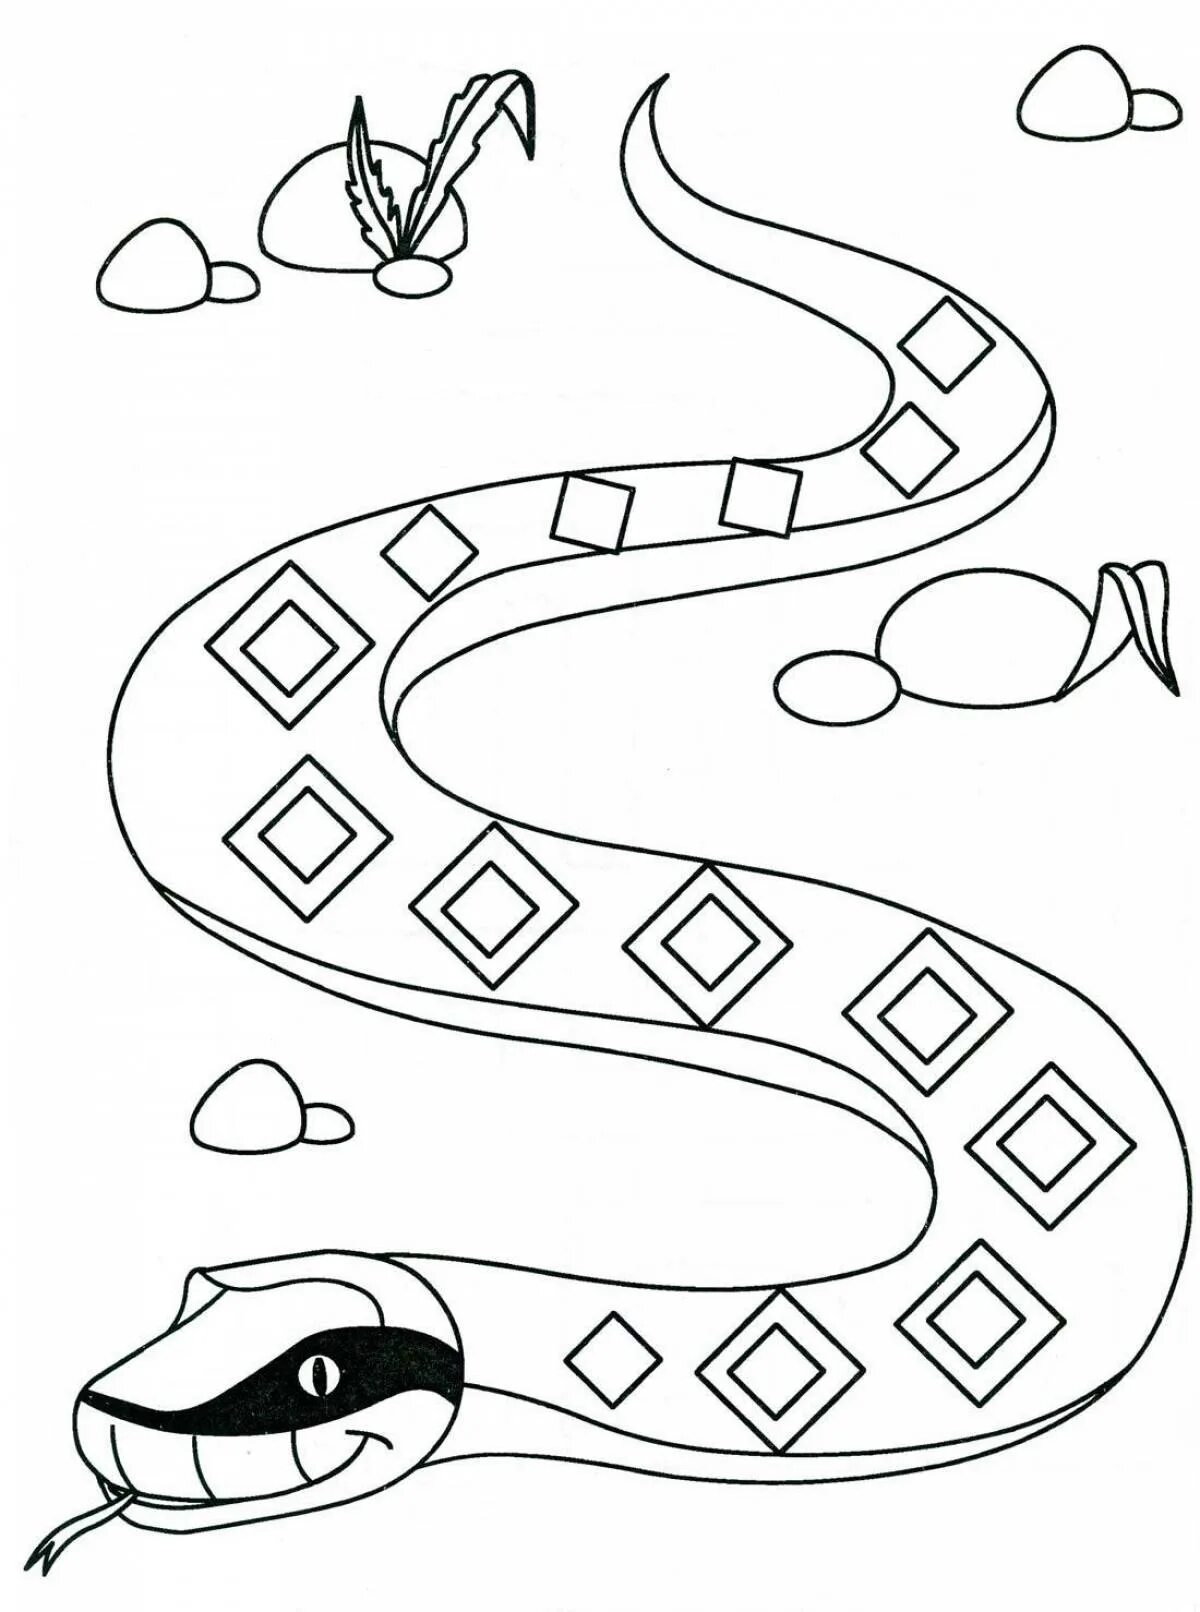 Змея раскраска. Змея раскраска для детей. Раскраски змей. Раскраска змеи для детей. Раскраска змей для детей